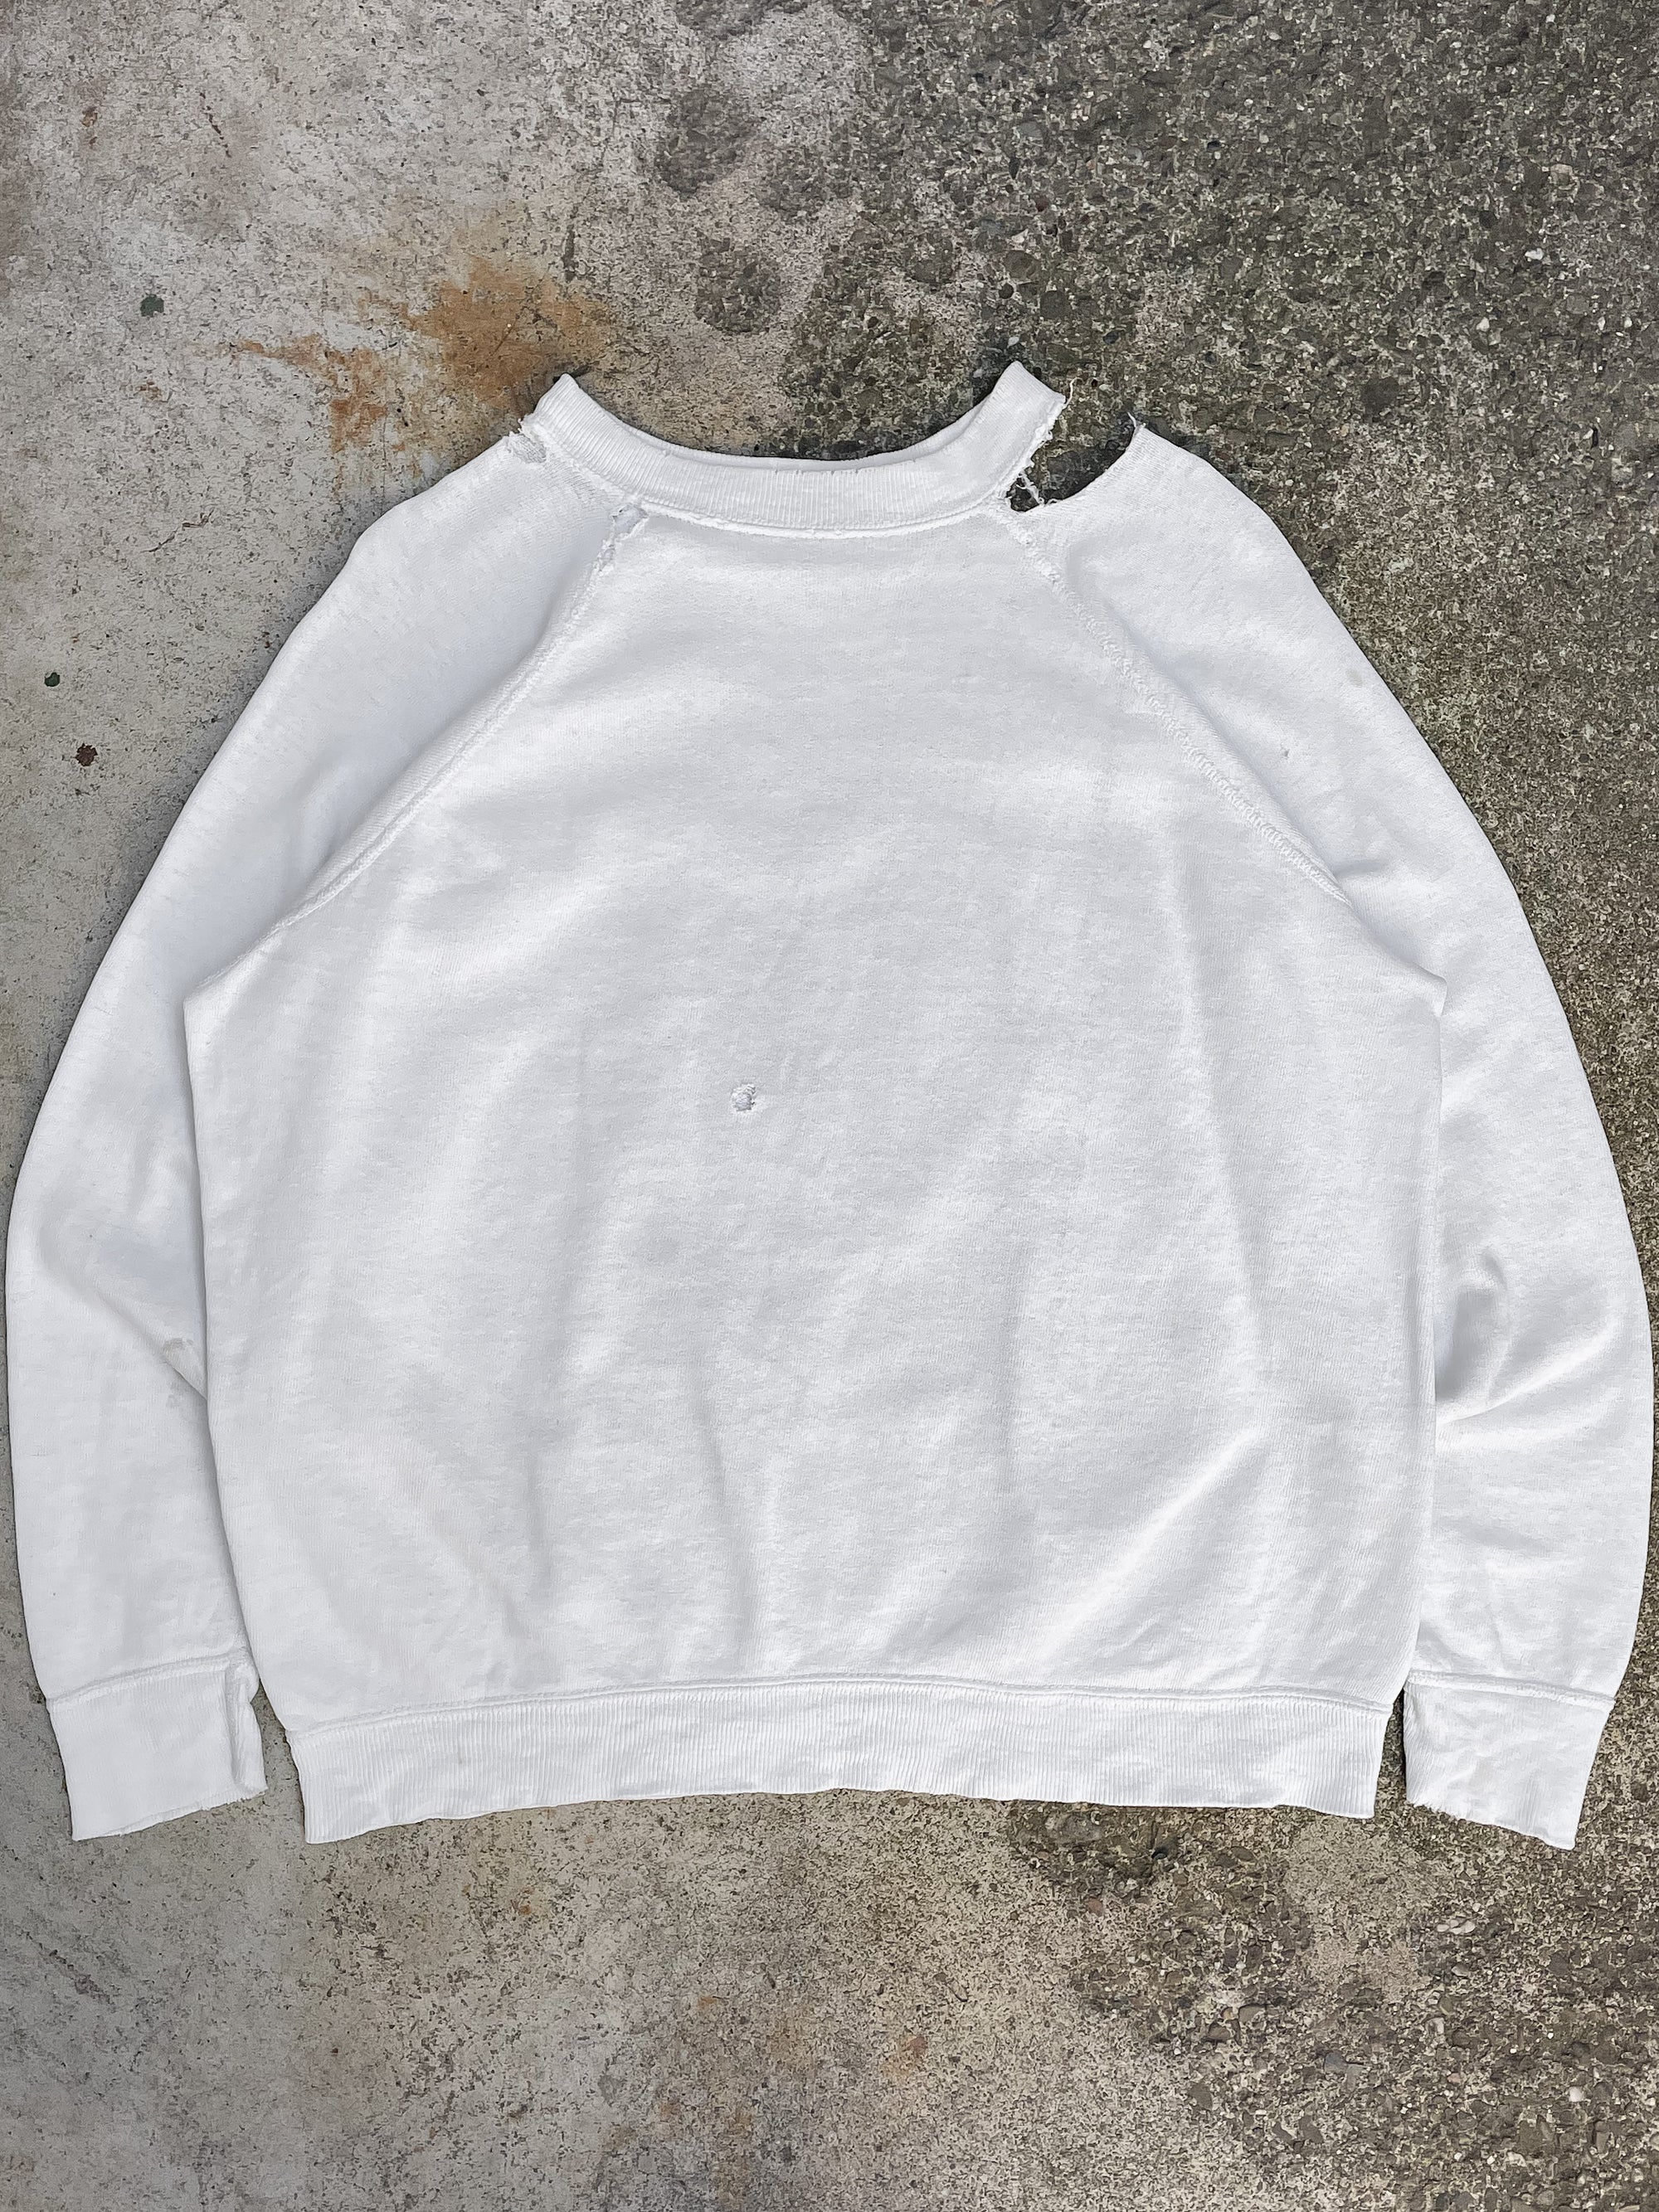 1960s Distressed White Raglan Sweatshirt